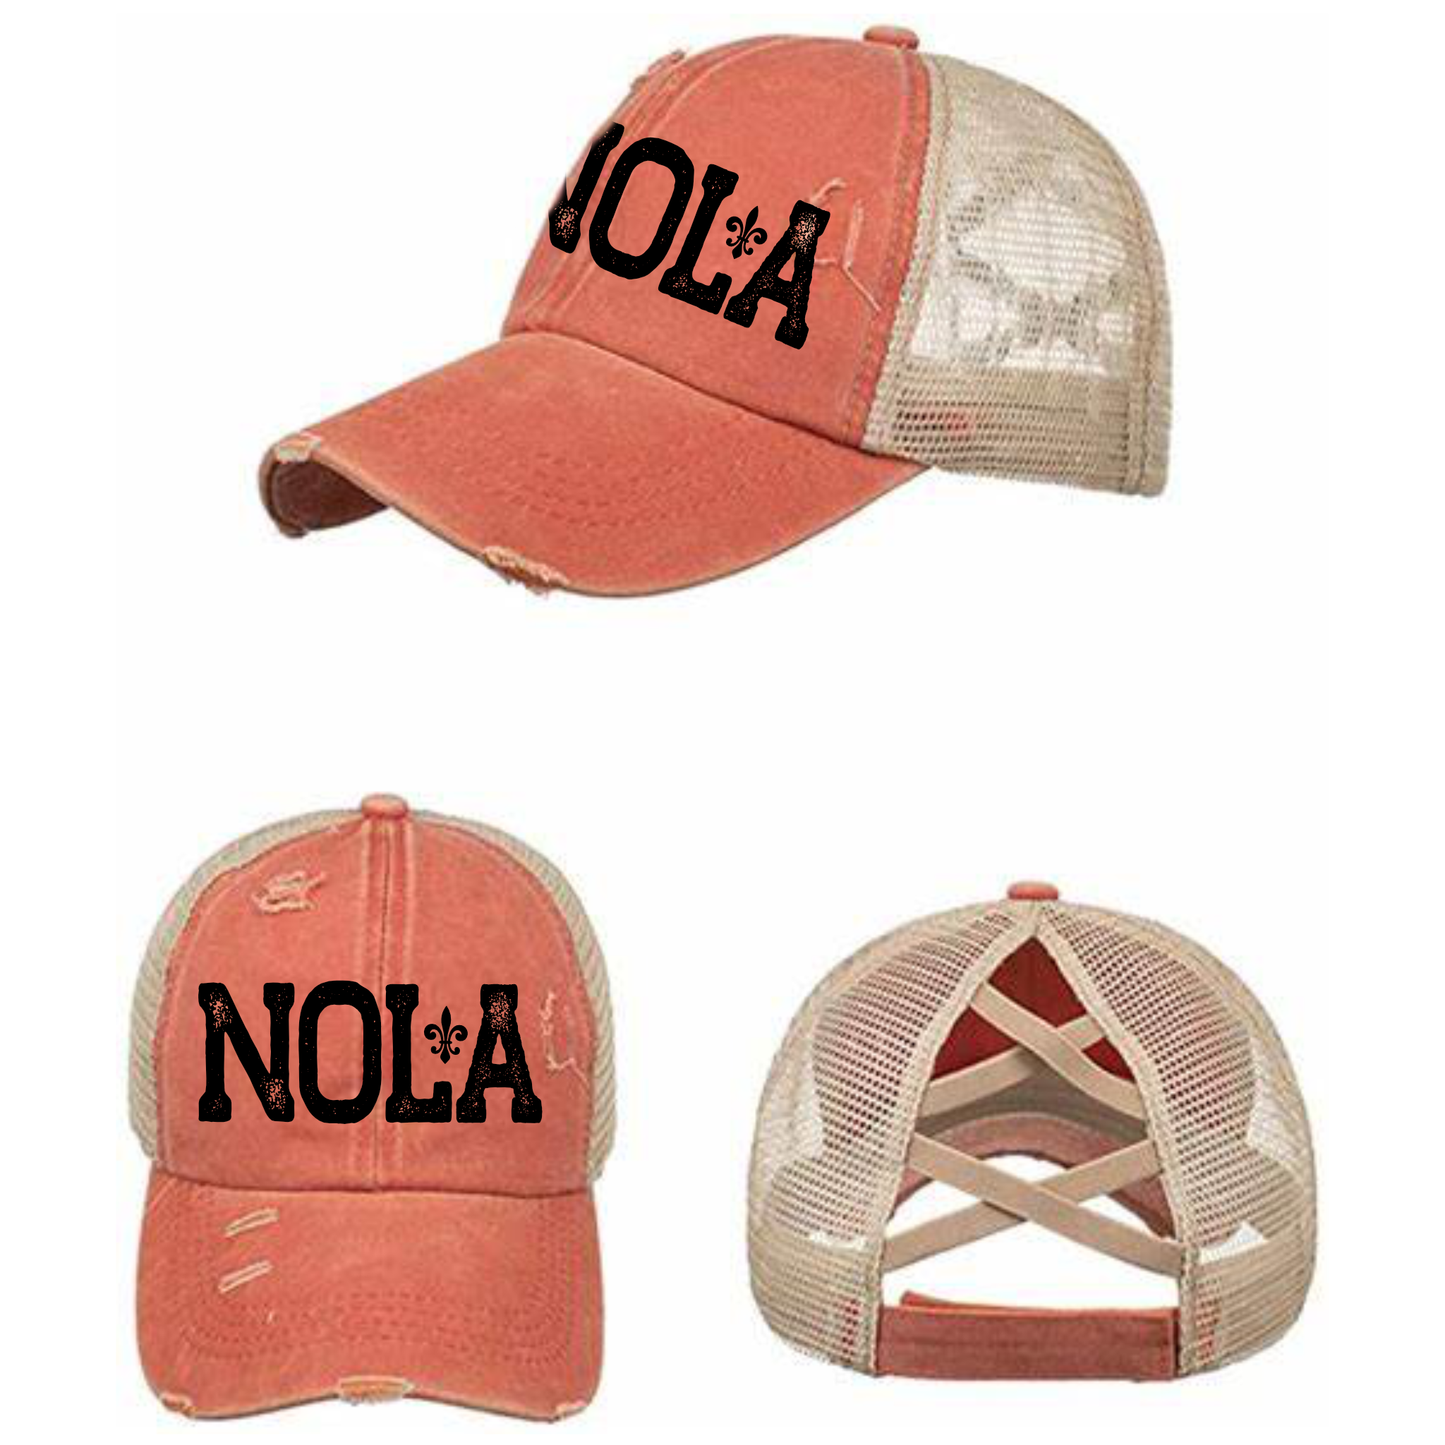 NOLA Criss Cross Hat - Red, Mint & Charcoal